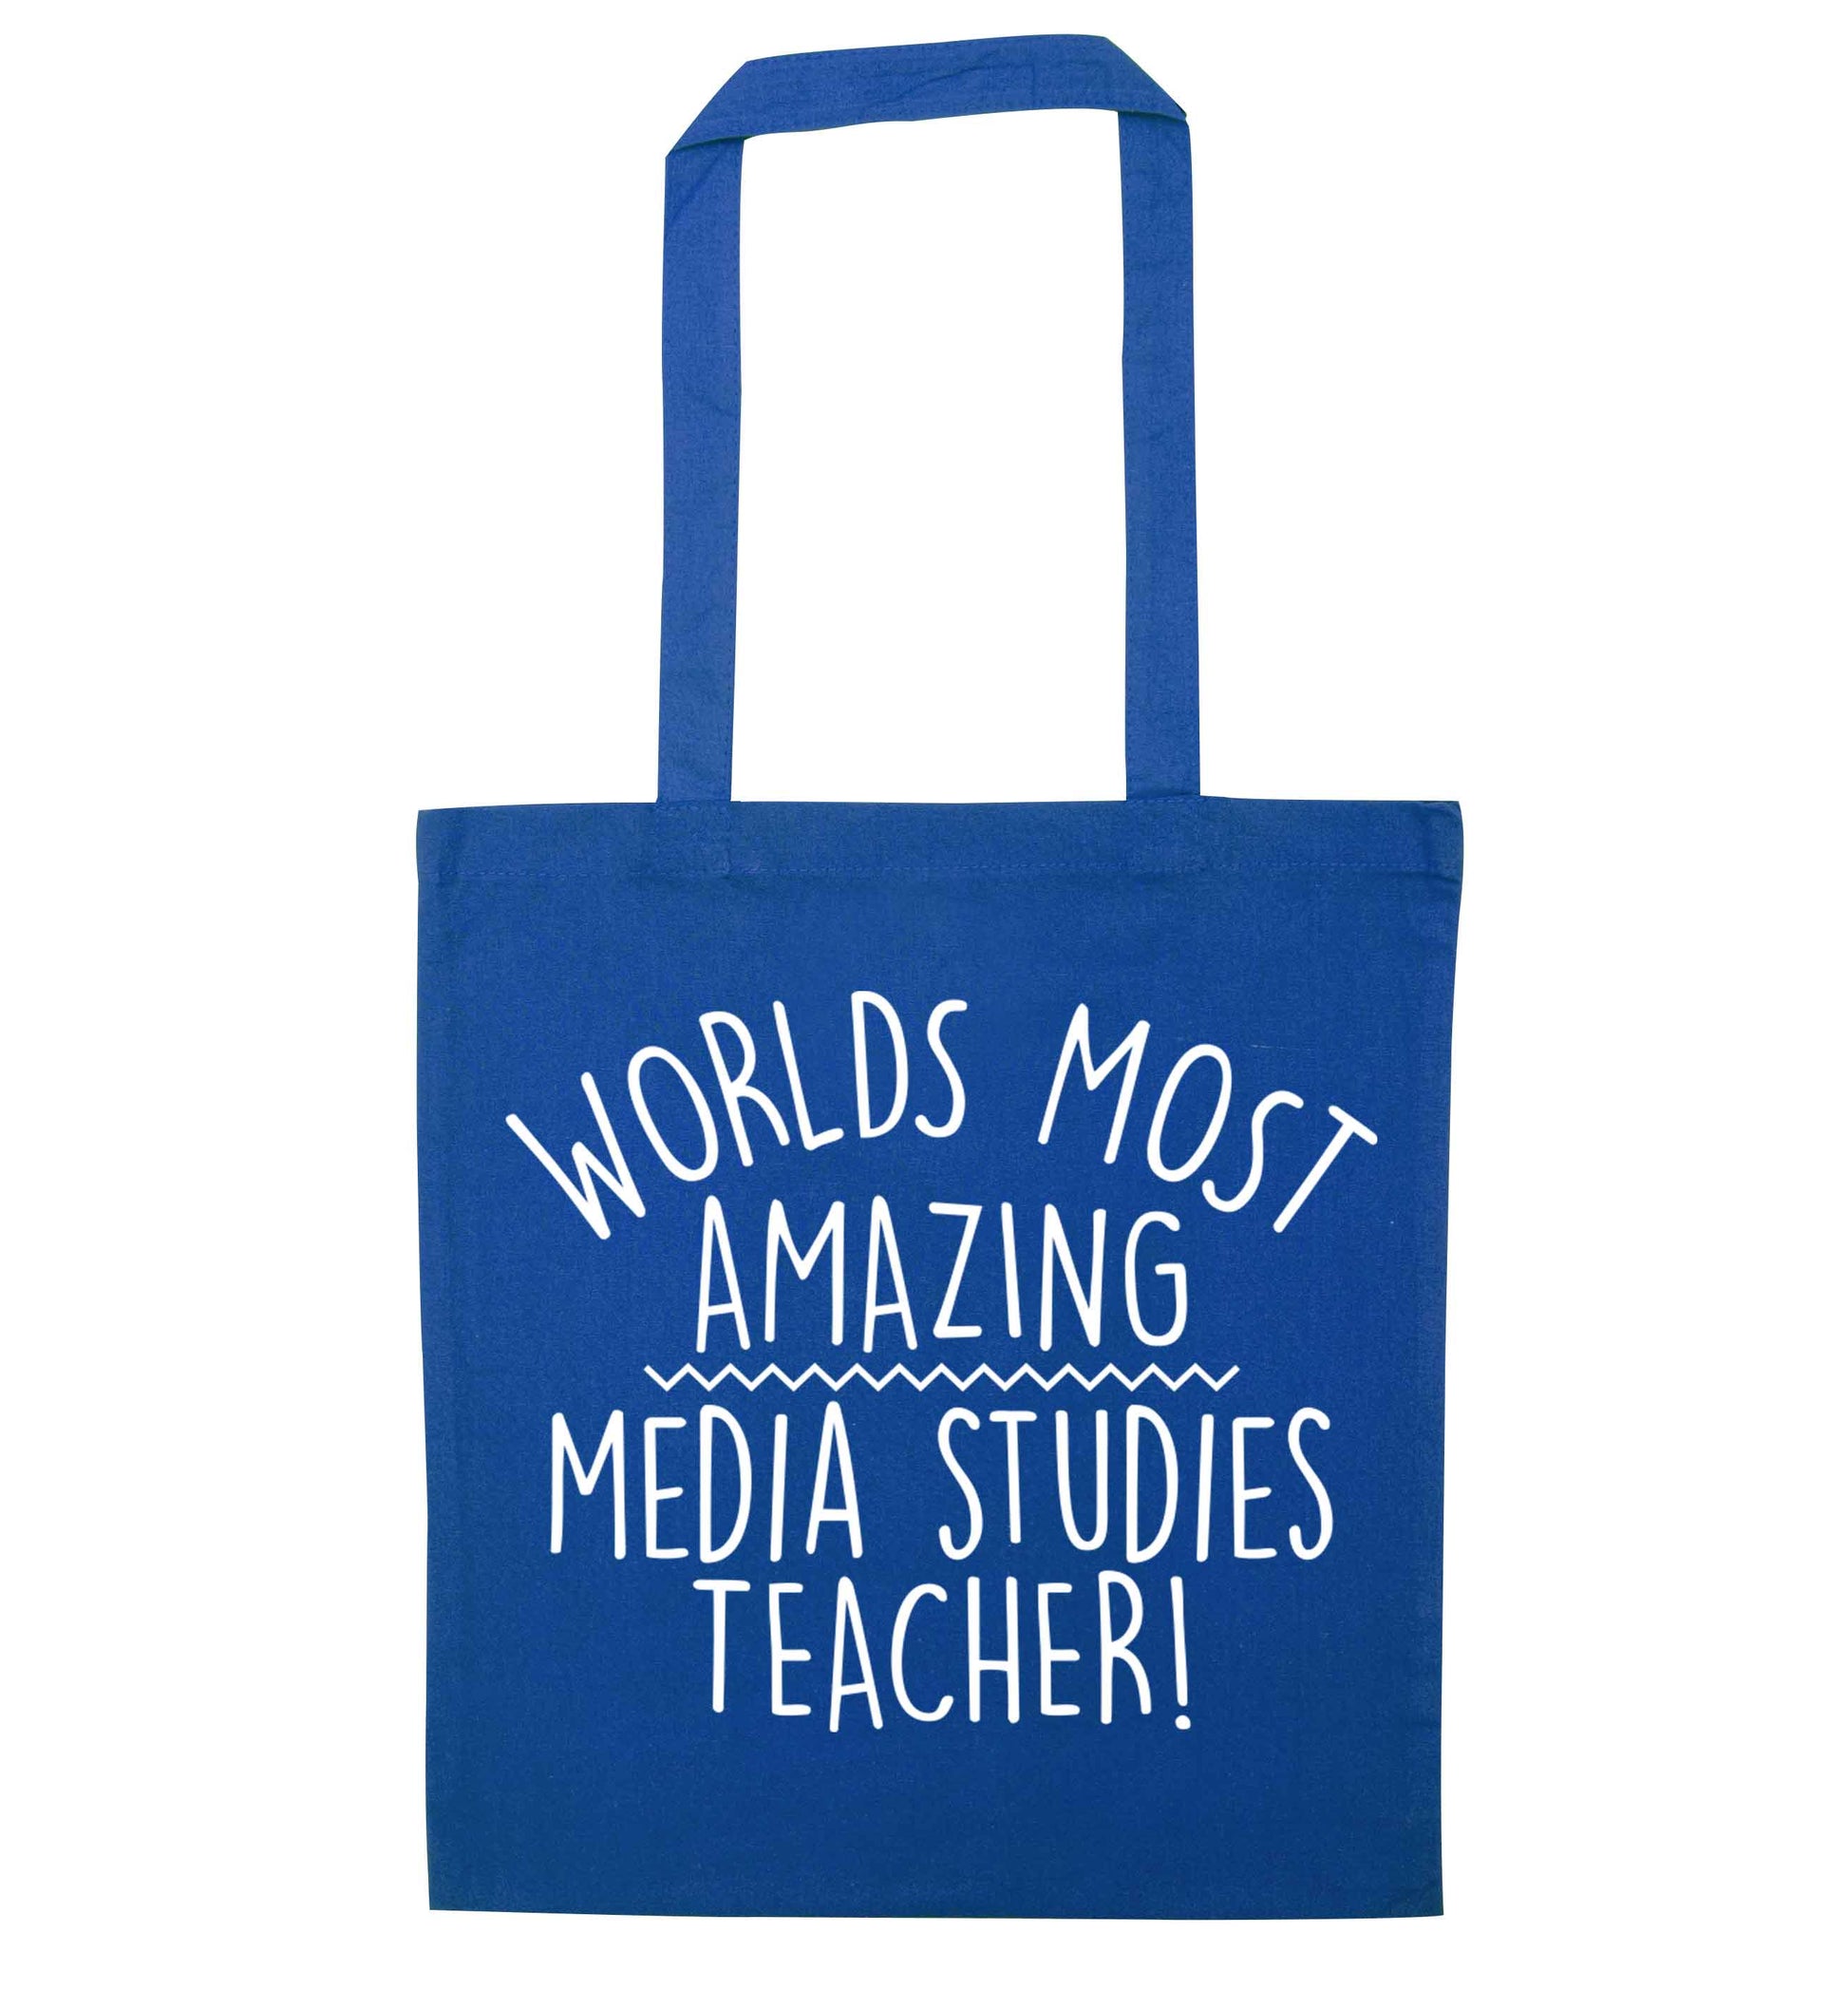 Worlds most amazing media studies teacher blue tote bag